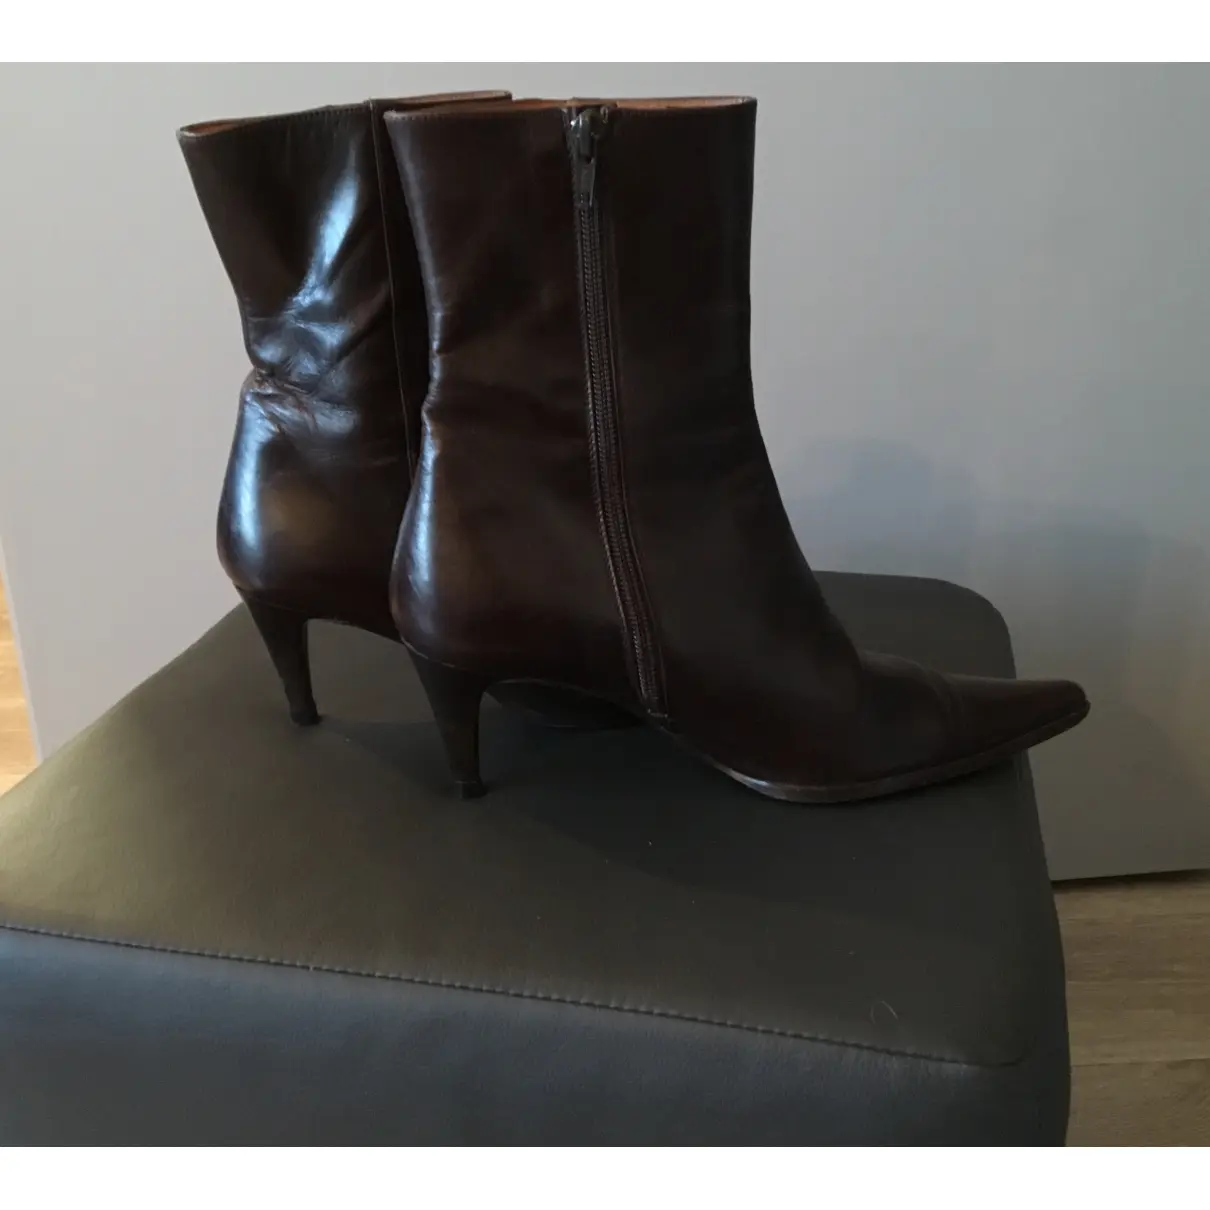 Luxury Jaime Mascaro Ankle boots Women